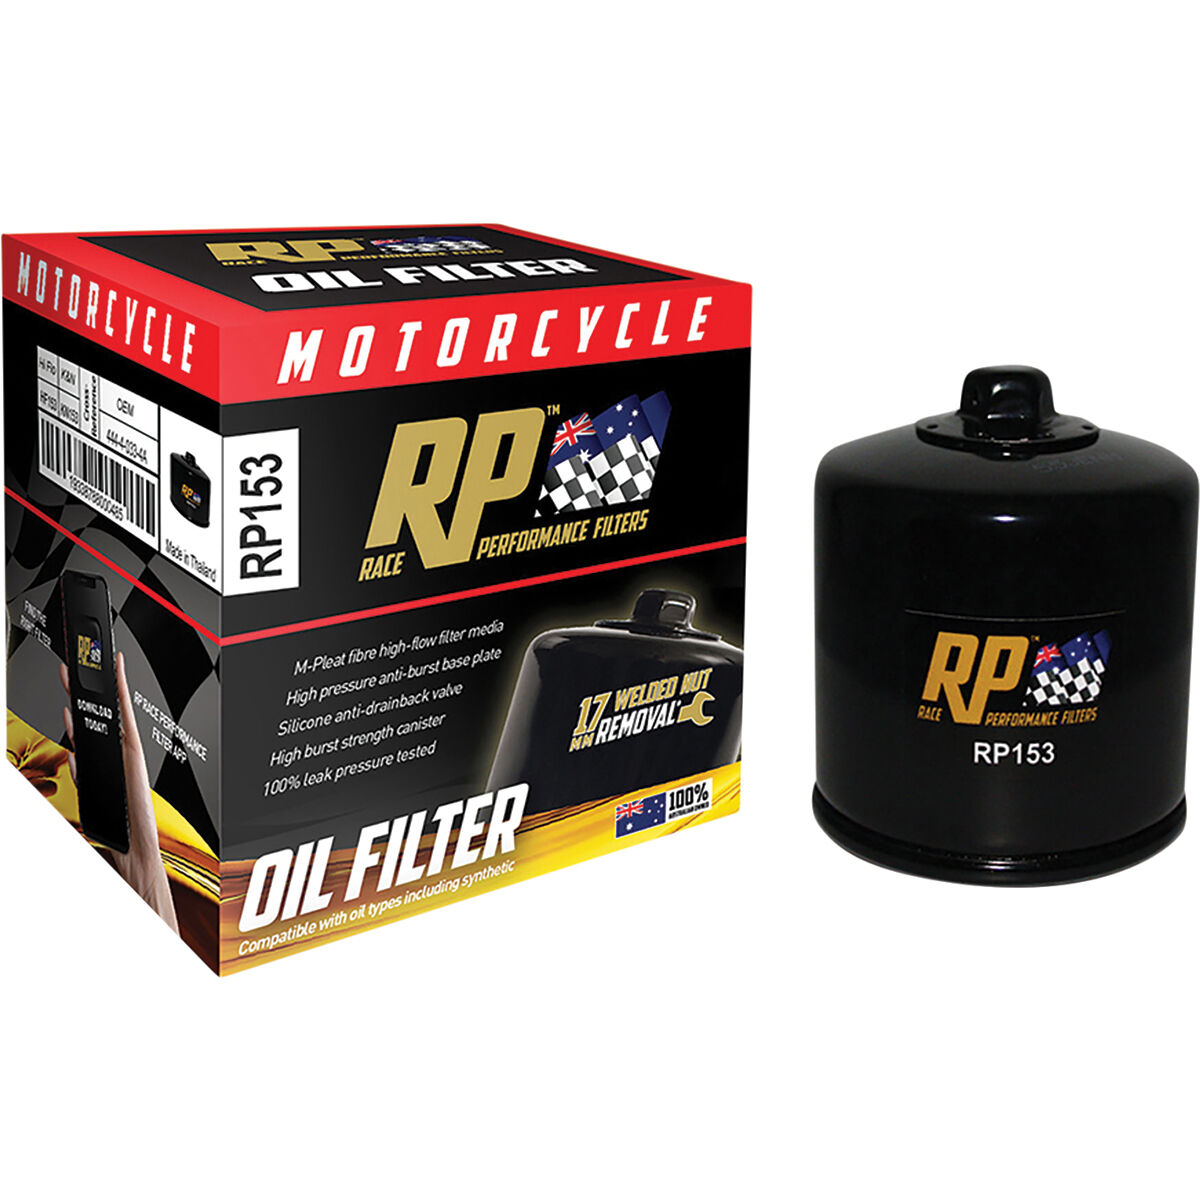 Motorcycle Oil Filter - RP153 | Supercheap Auto